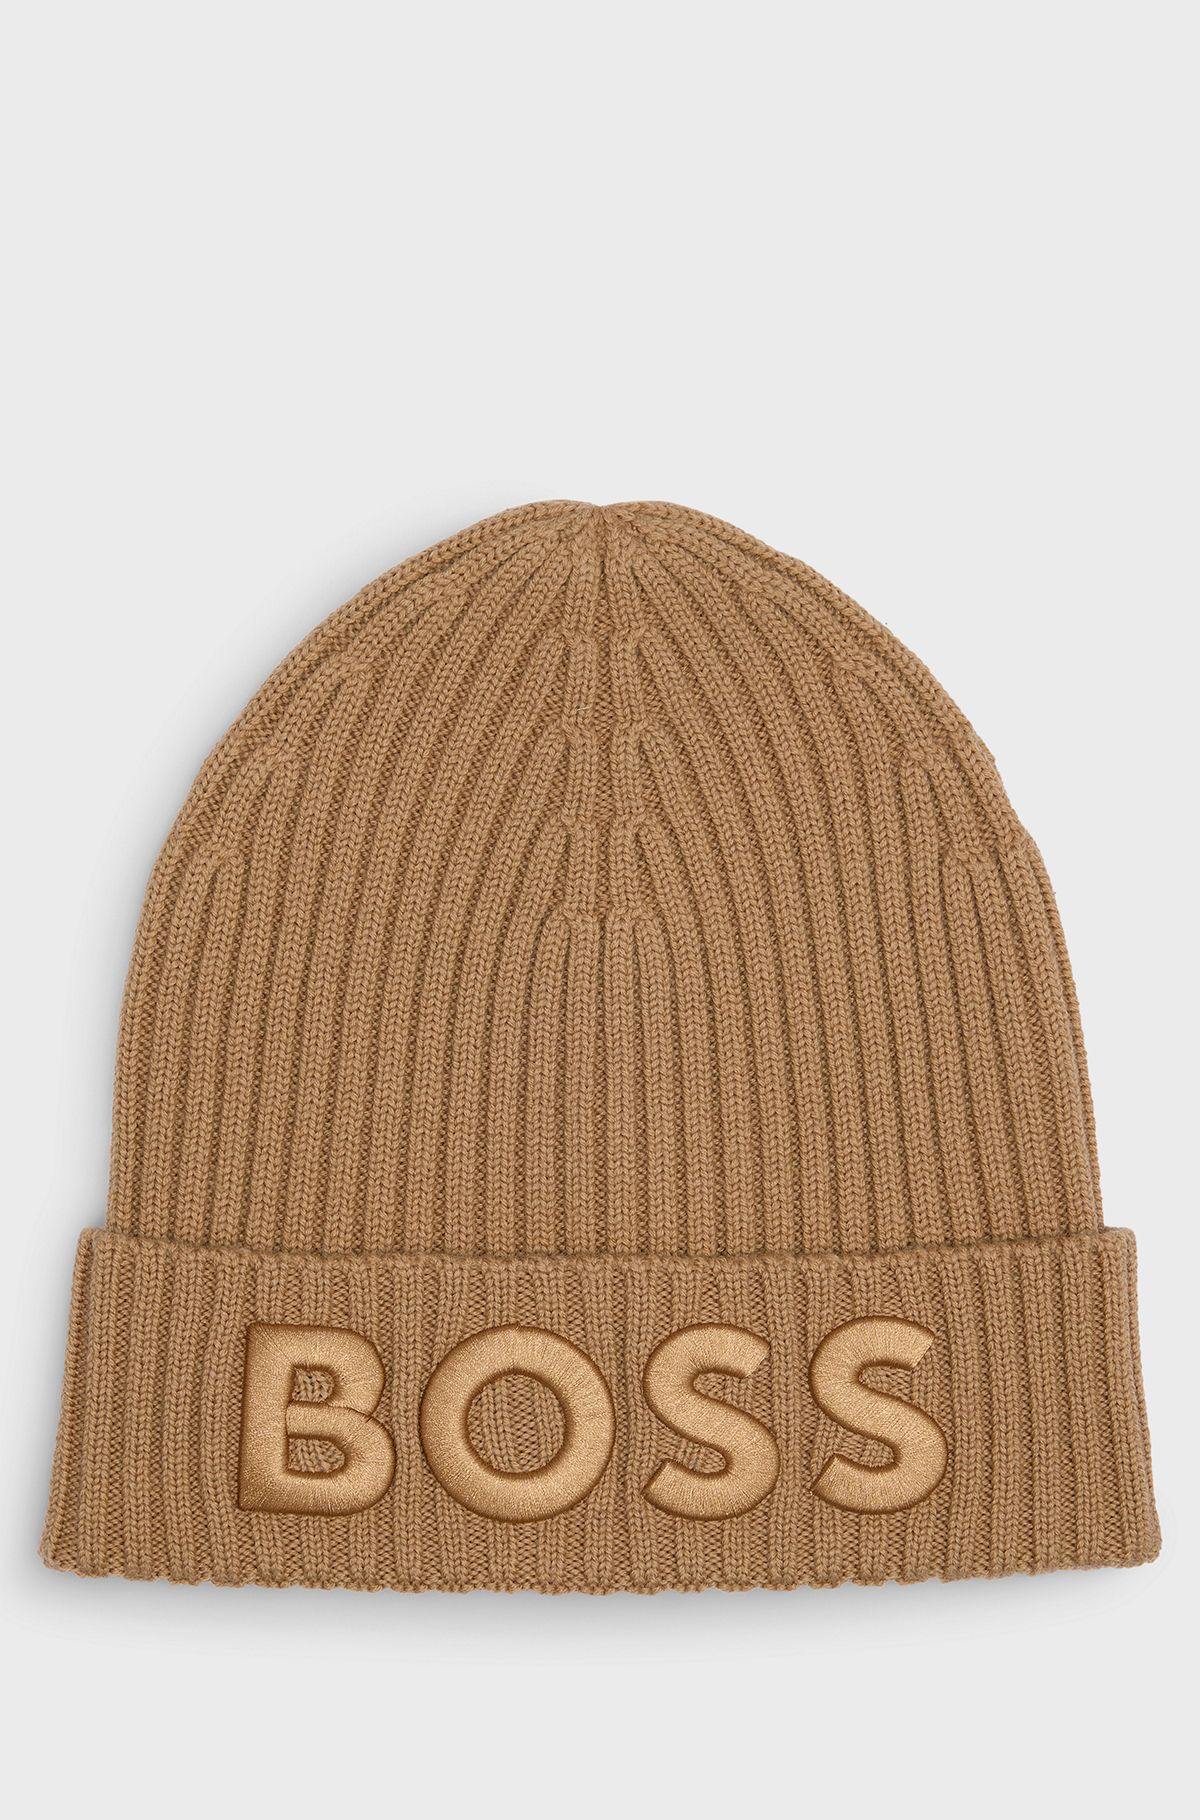 Virgin-wool beanie hat with embroidered logo, Beige